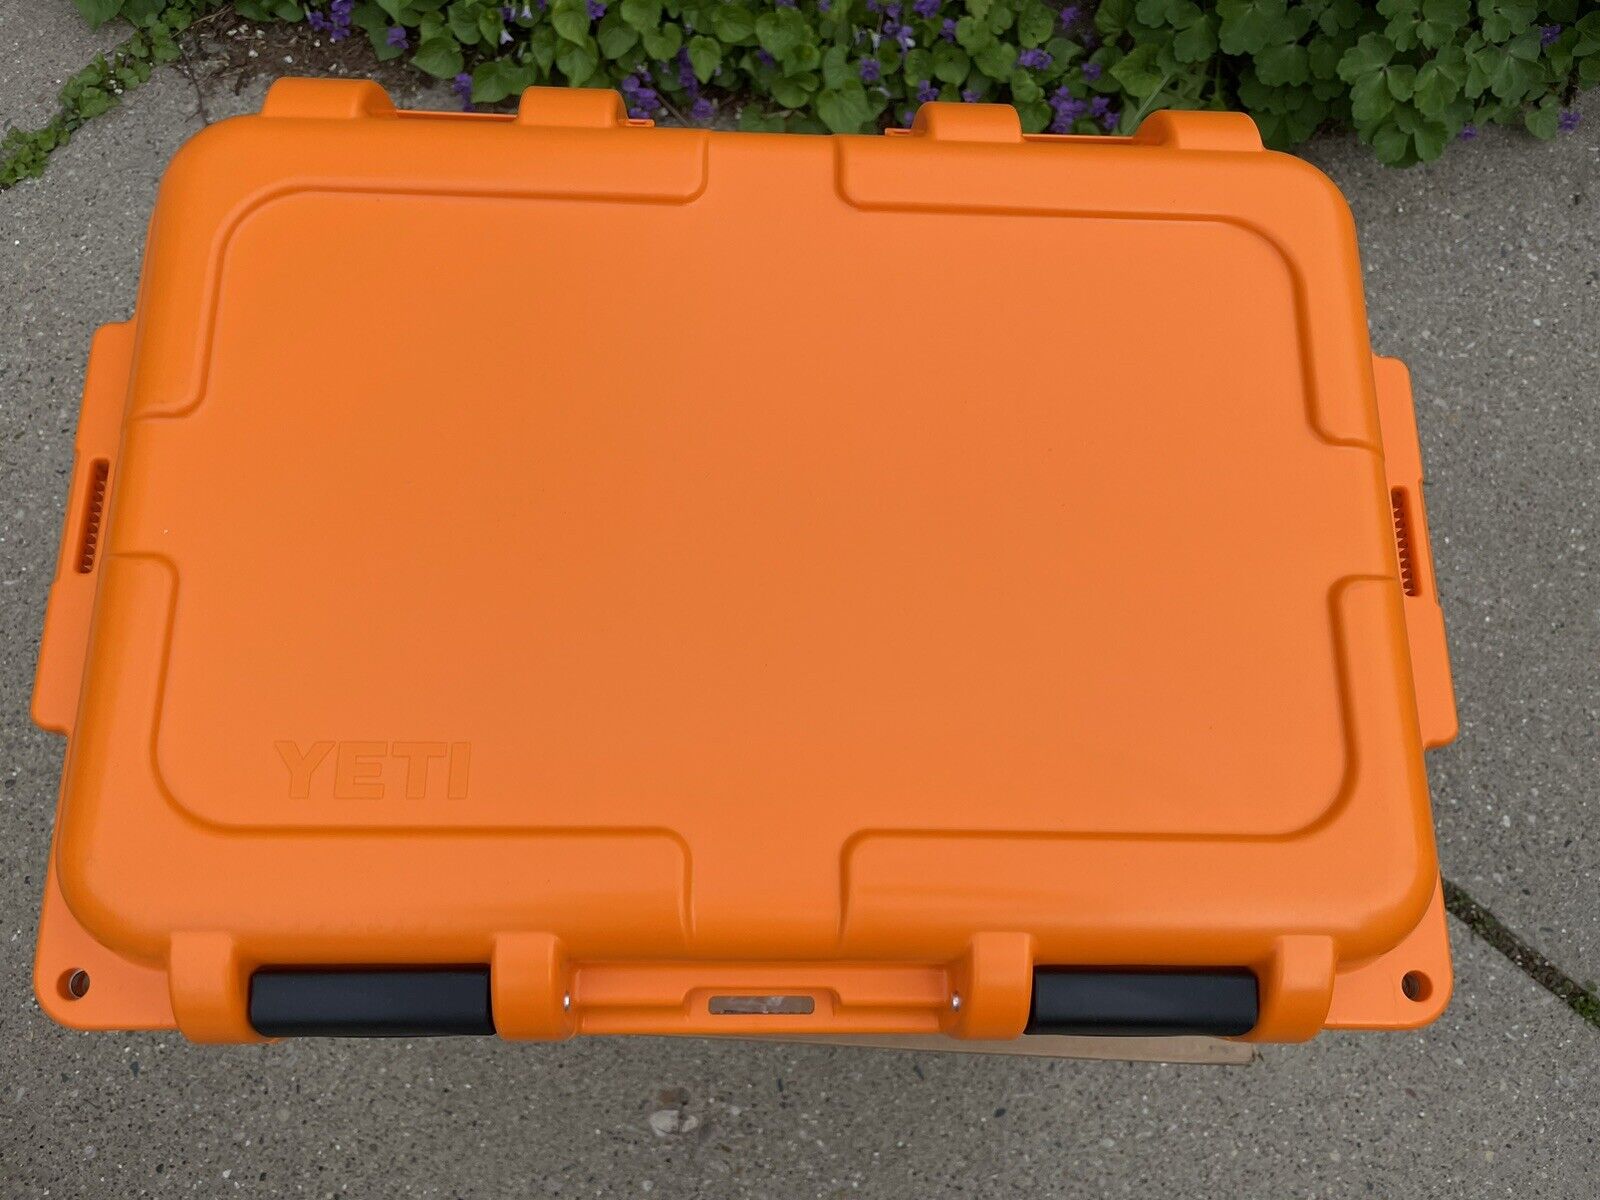 Yeti LoadOut GoBox 30 Gear Case - King Crab Orange for sale online